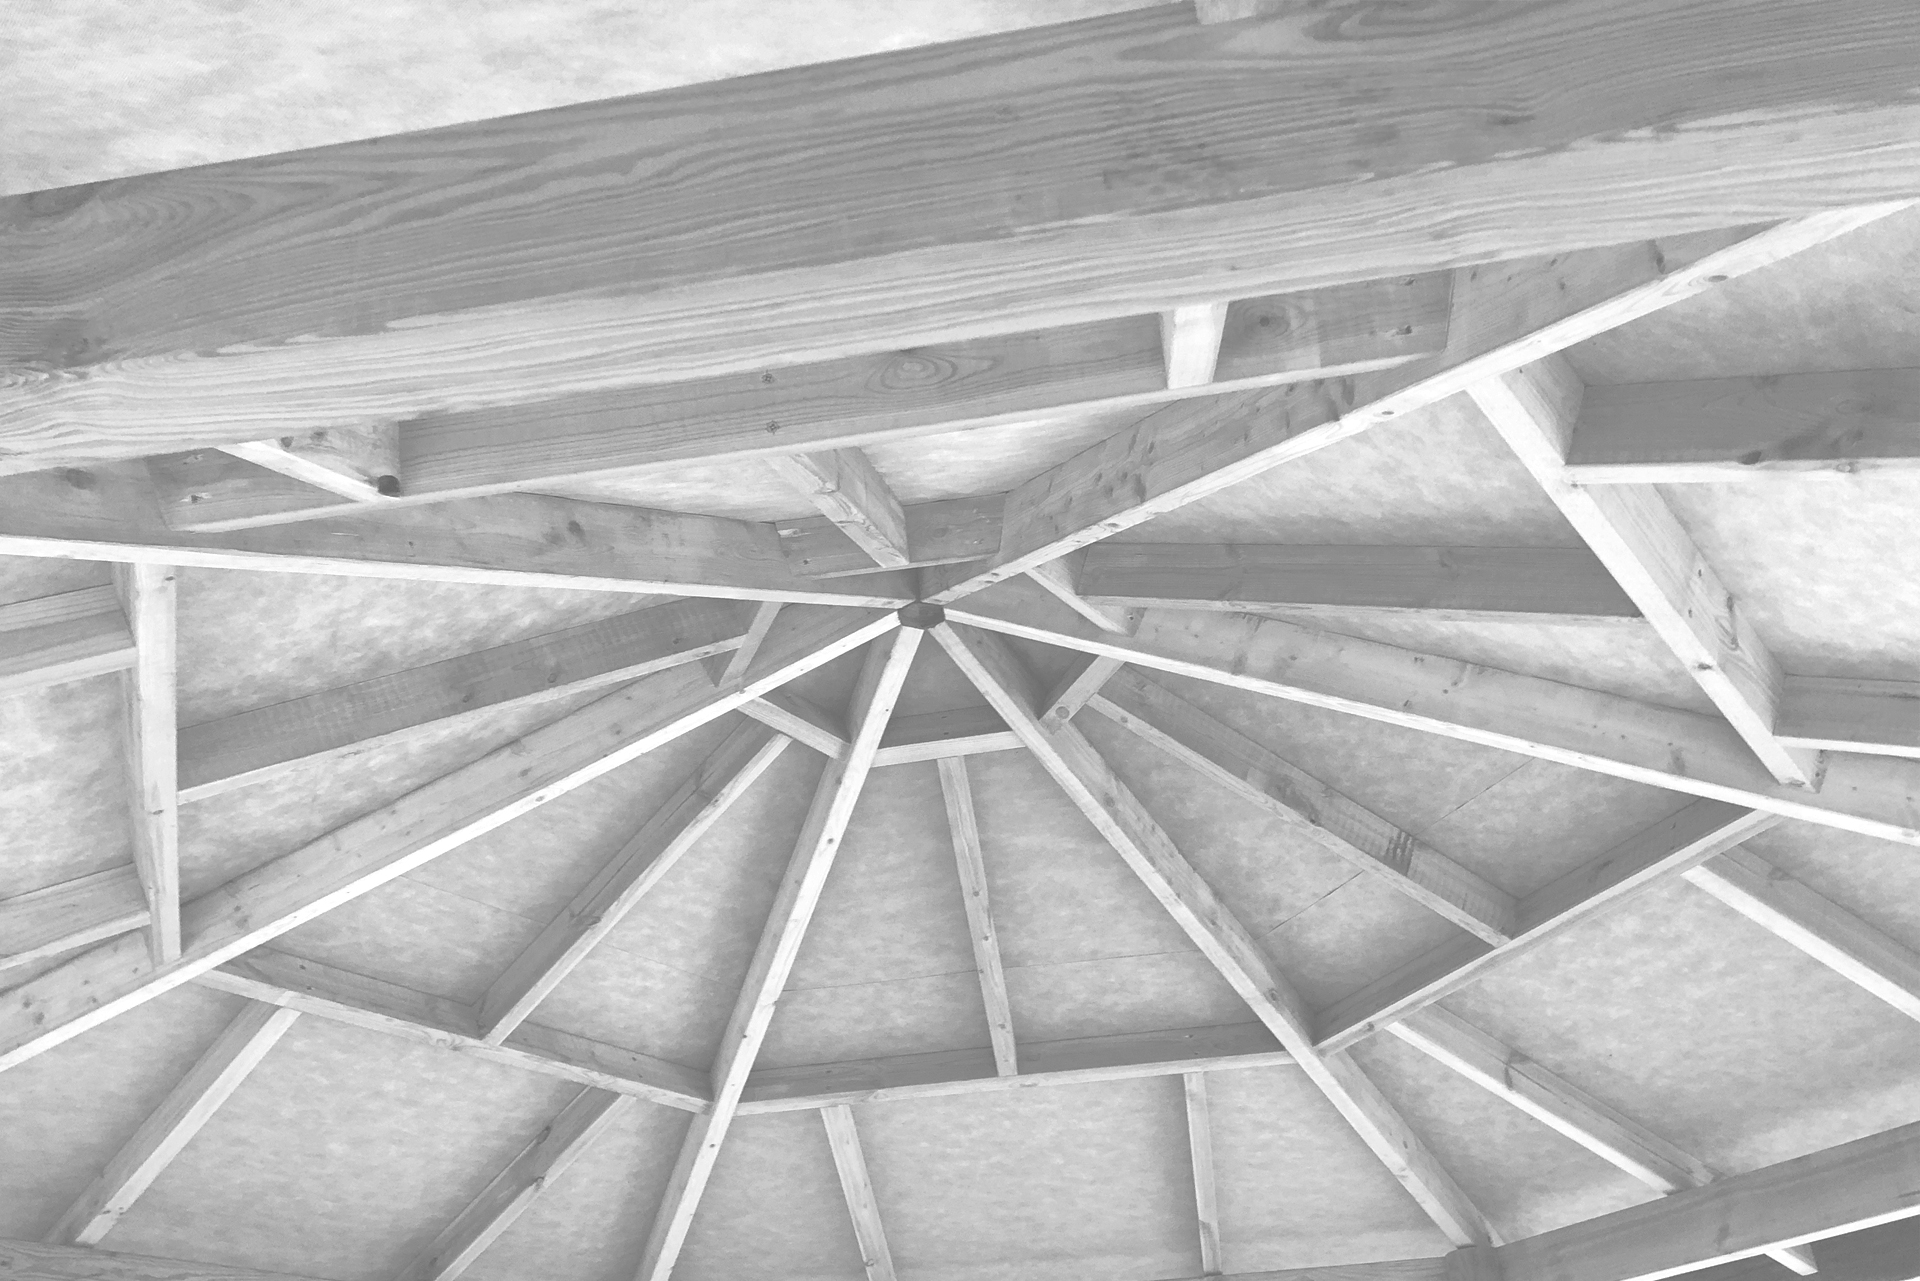 Grey Canopy Roof underside